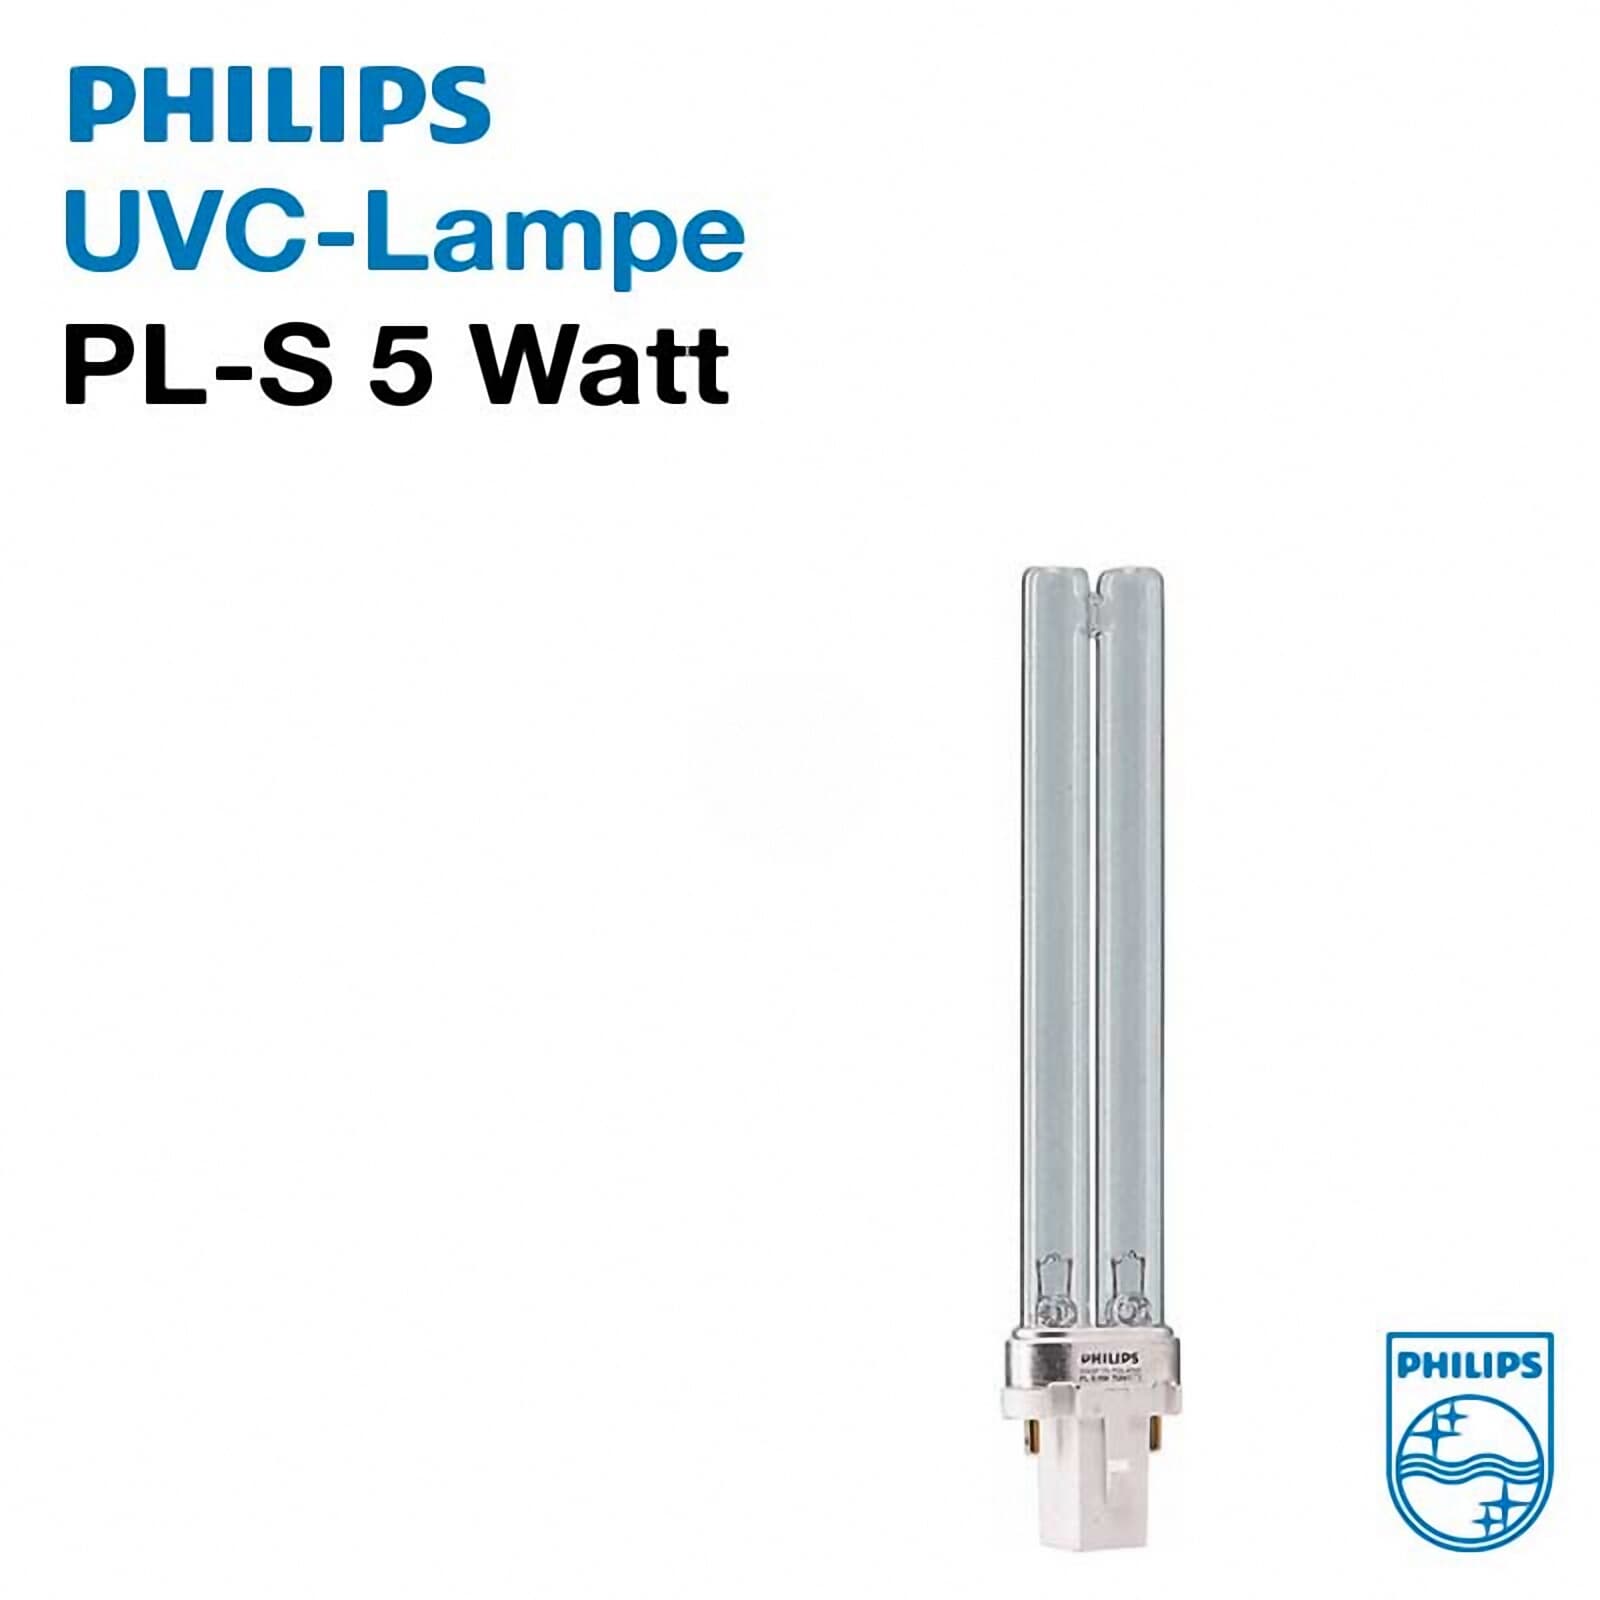 TUV PL-S 2 Stück G23-7W Philips UVC Lampe UV-C Ersatzbrenner Lampe 